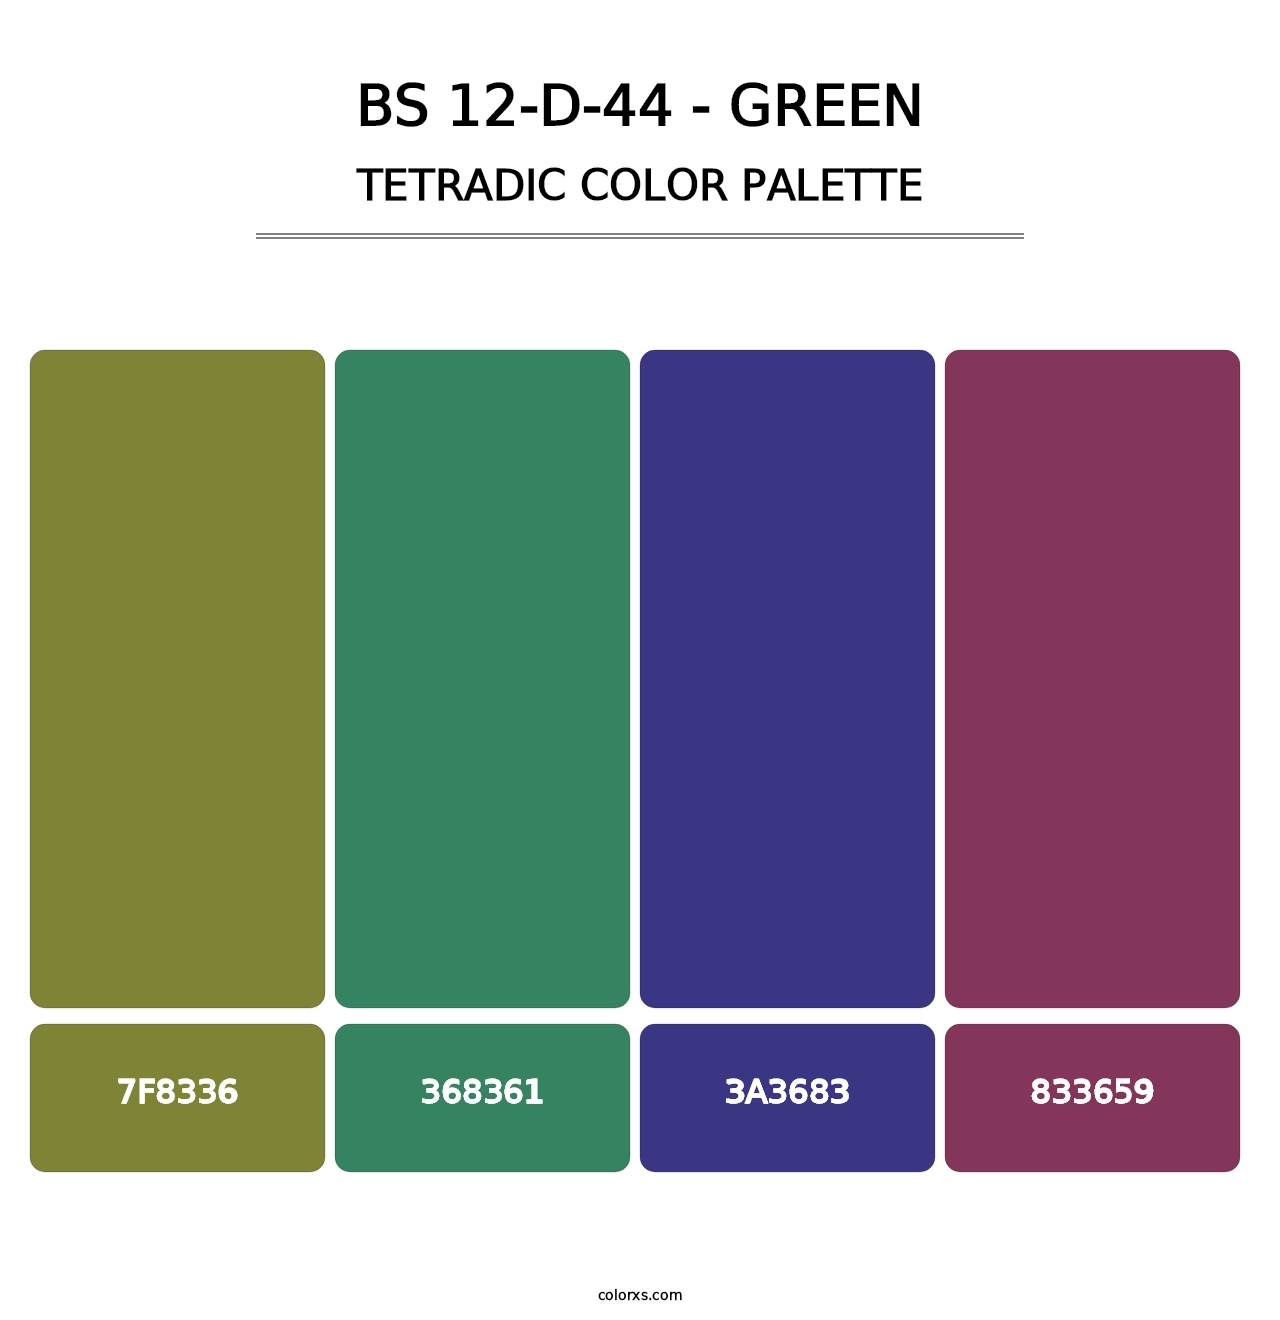 BS 12-D-44 - Green - Tetradic Color Palette